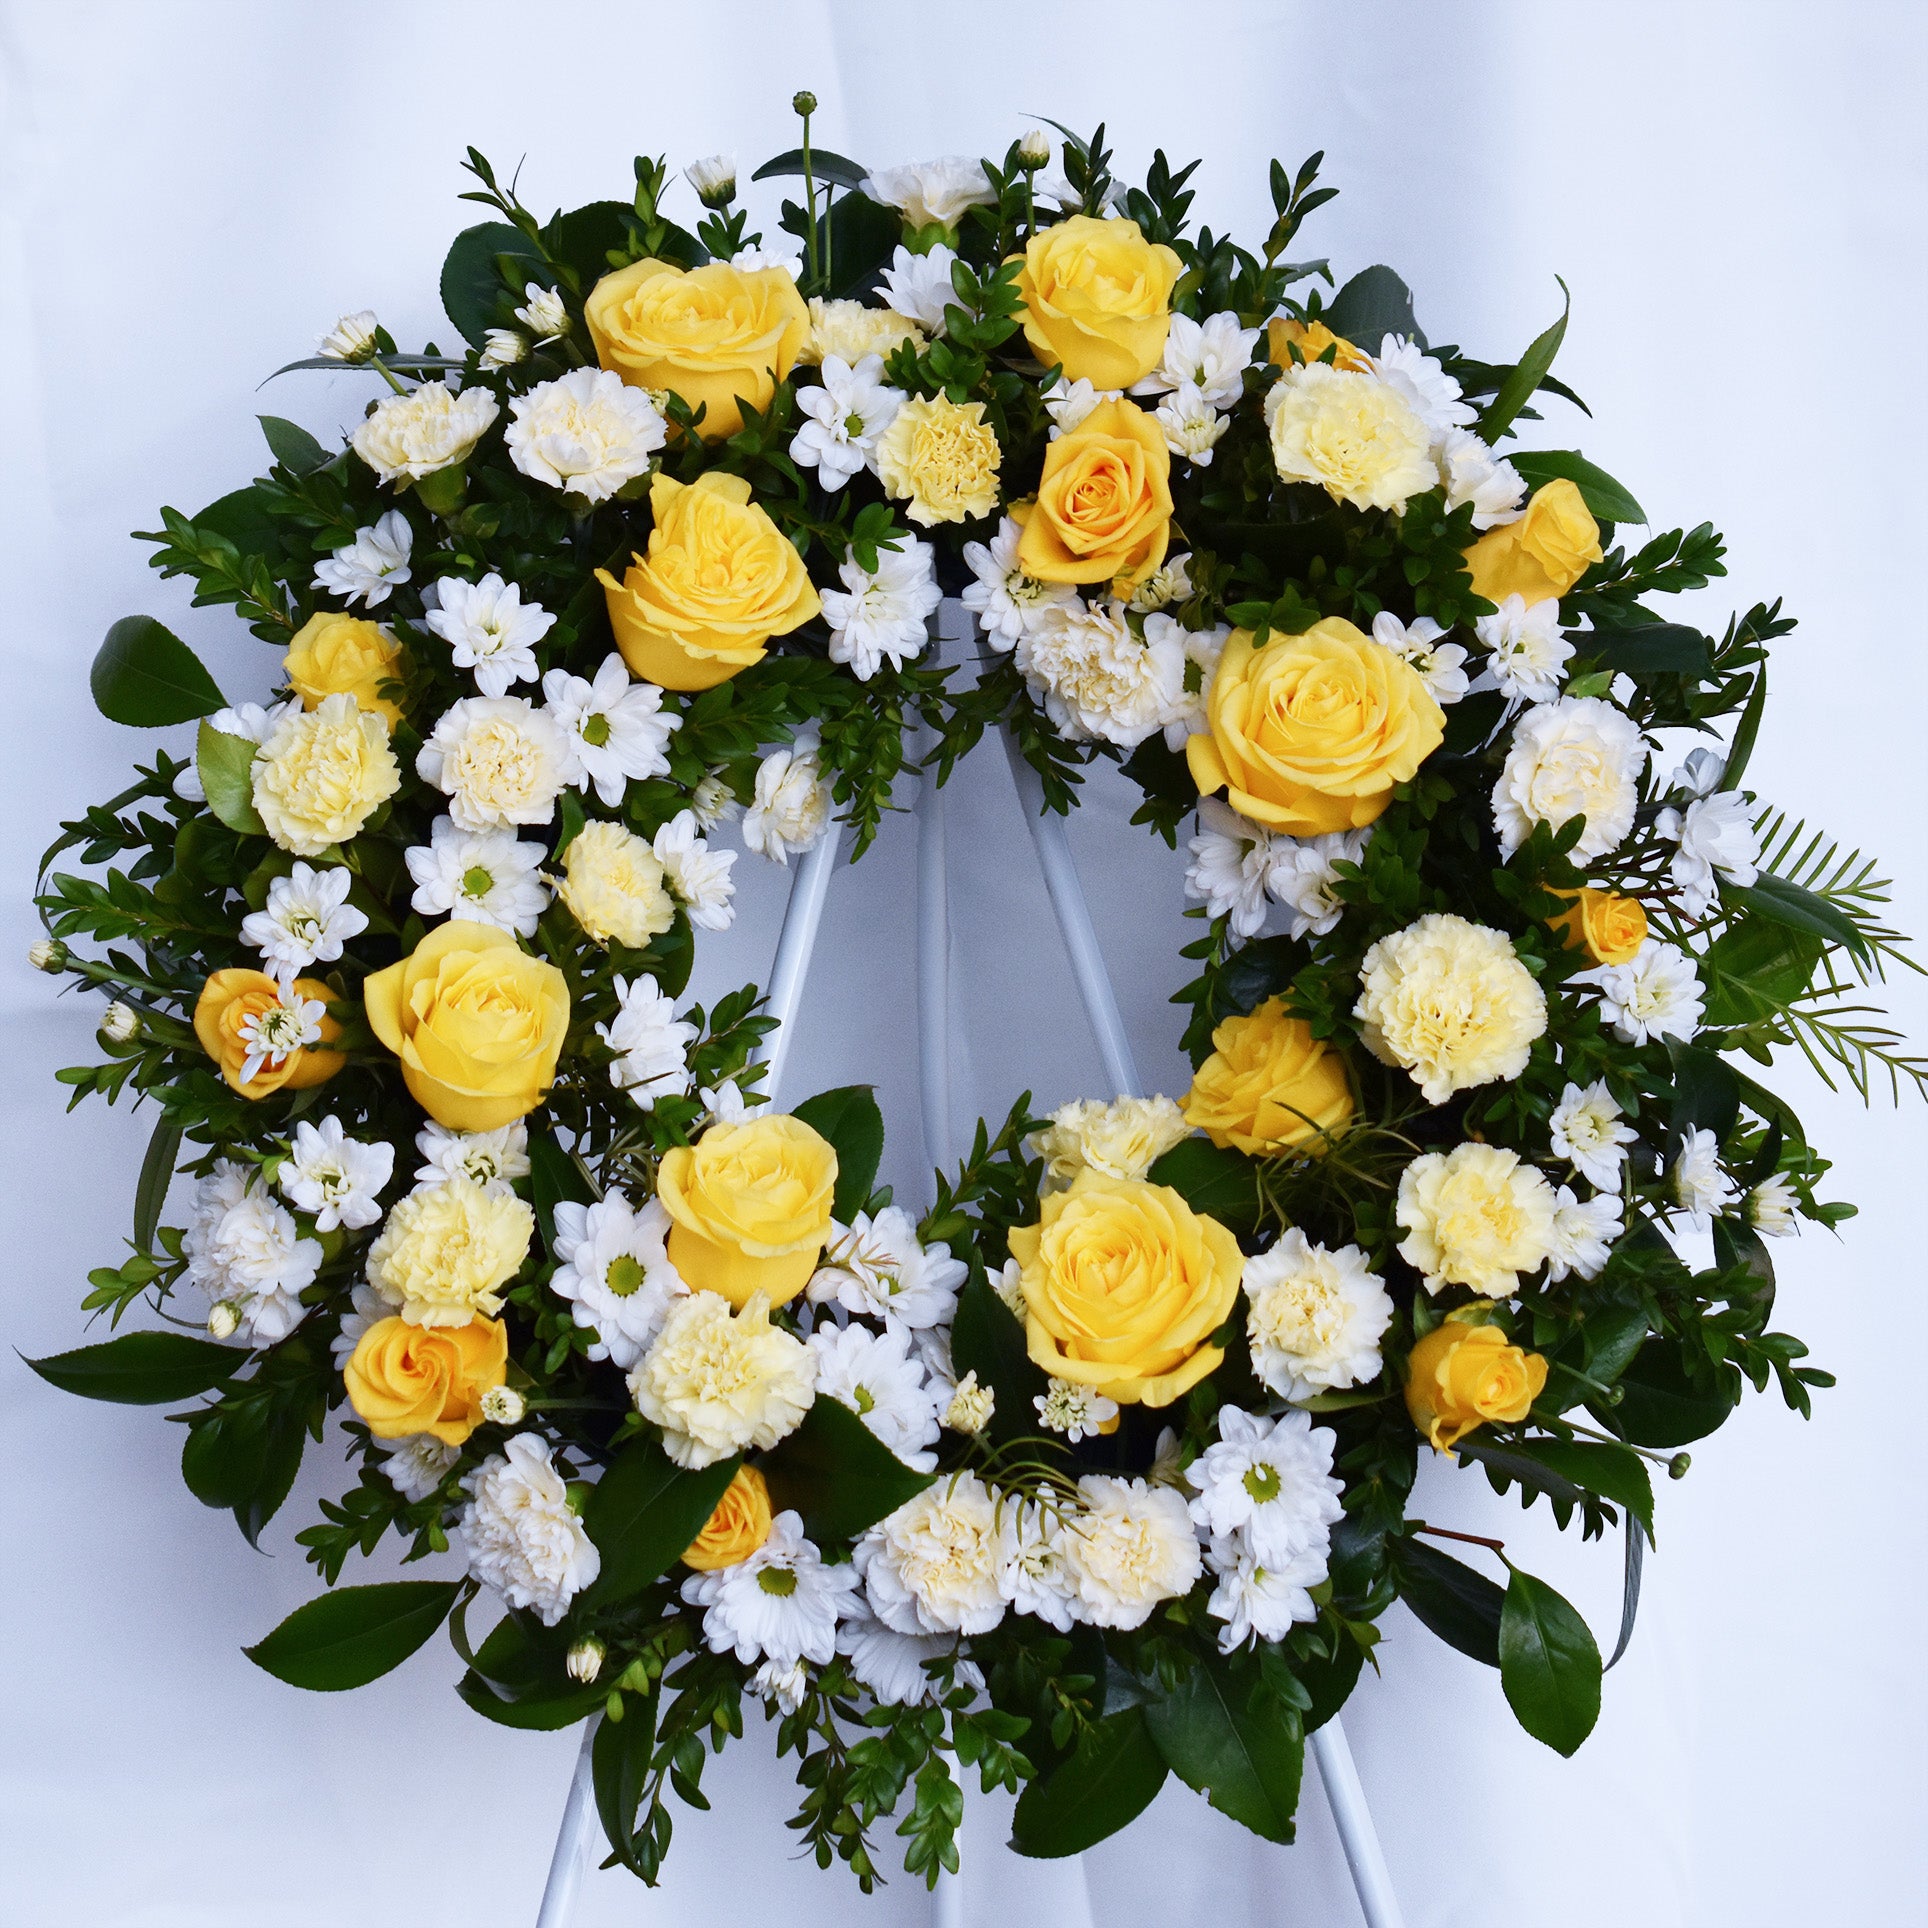 Lemon Cheesecake Funeral Flower Wreath